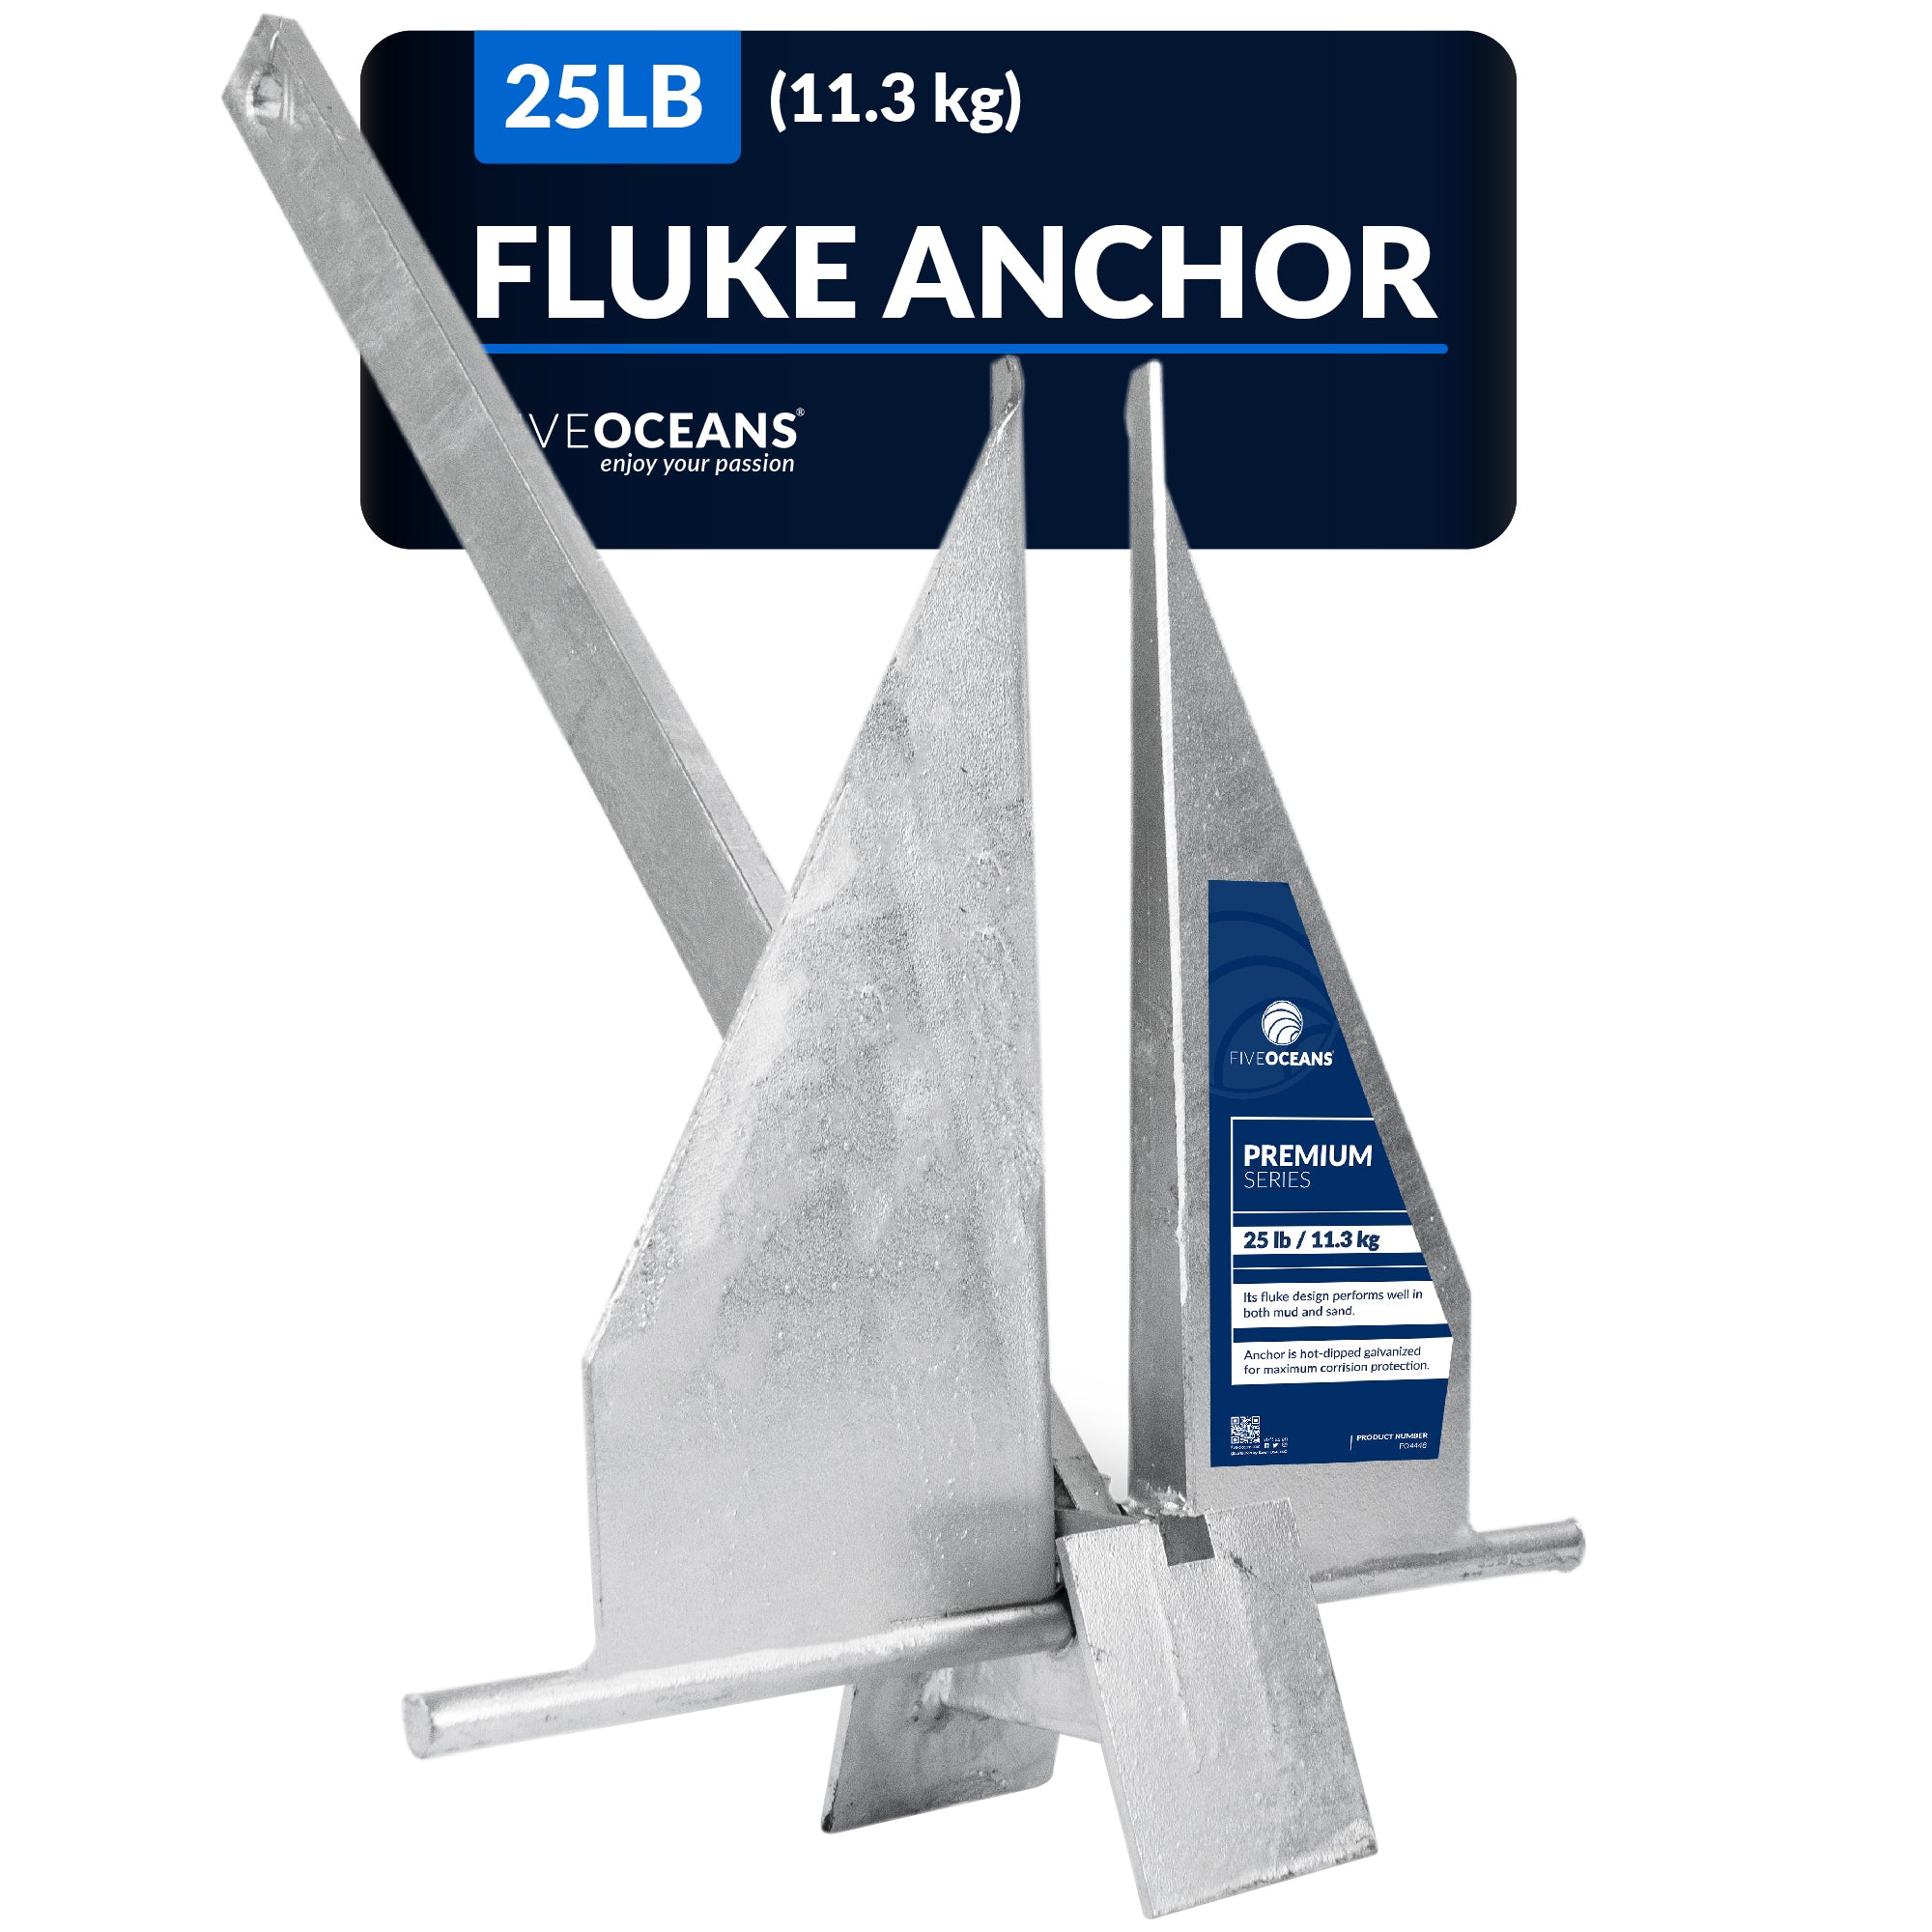 Fluke Anchor, 25 Lb, Hot Dipped Galvanized Steel - FO4448